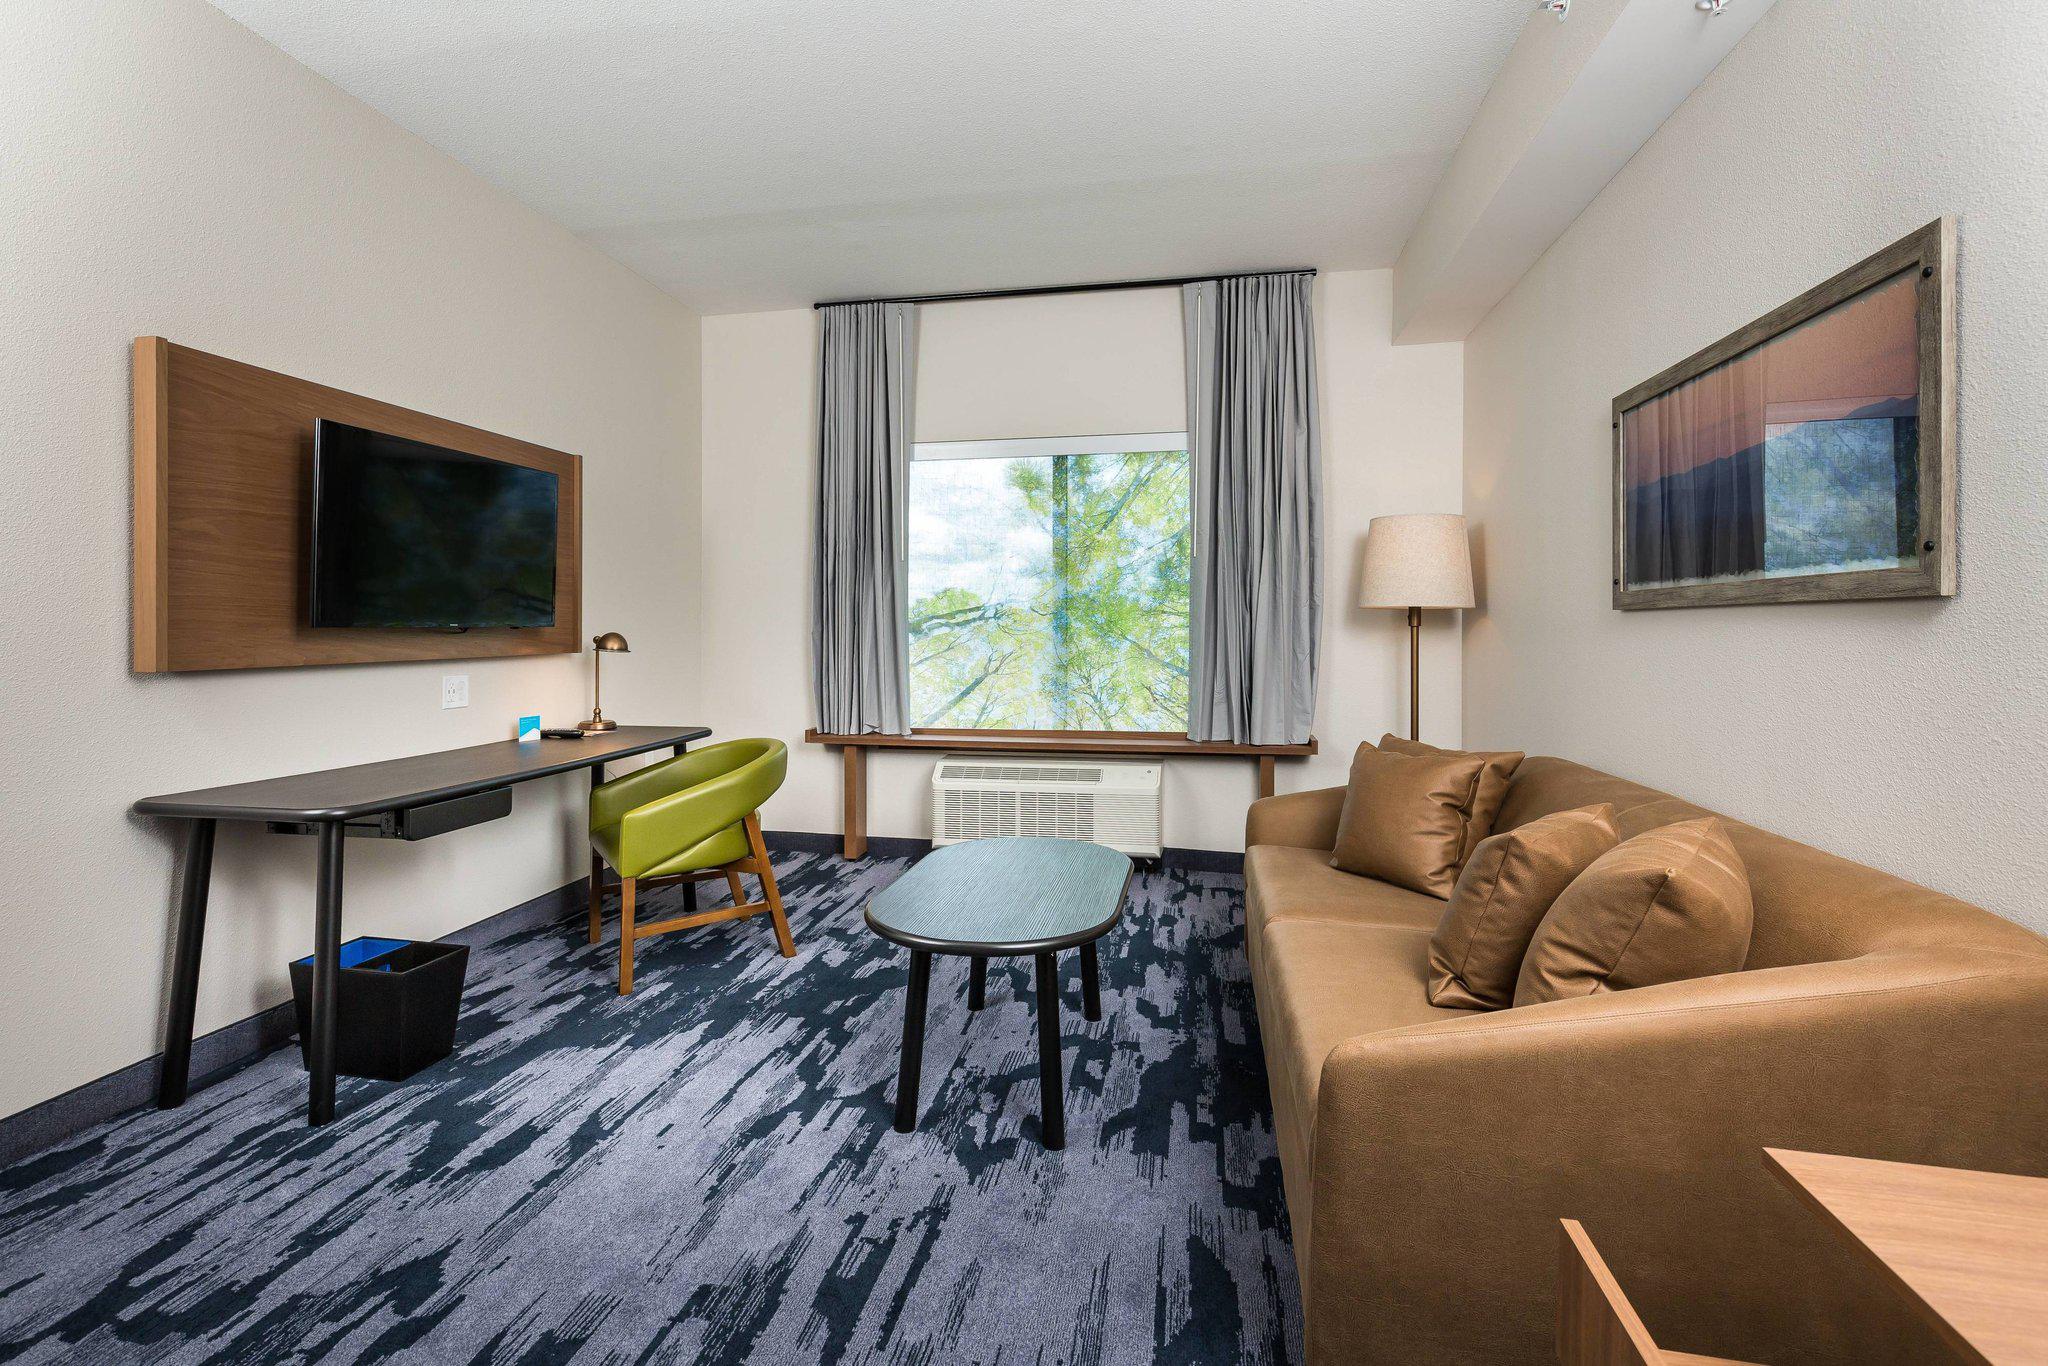 Fairfield Inn & Suites by Marriott Crestview Photo